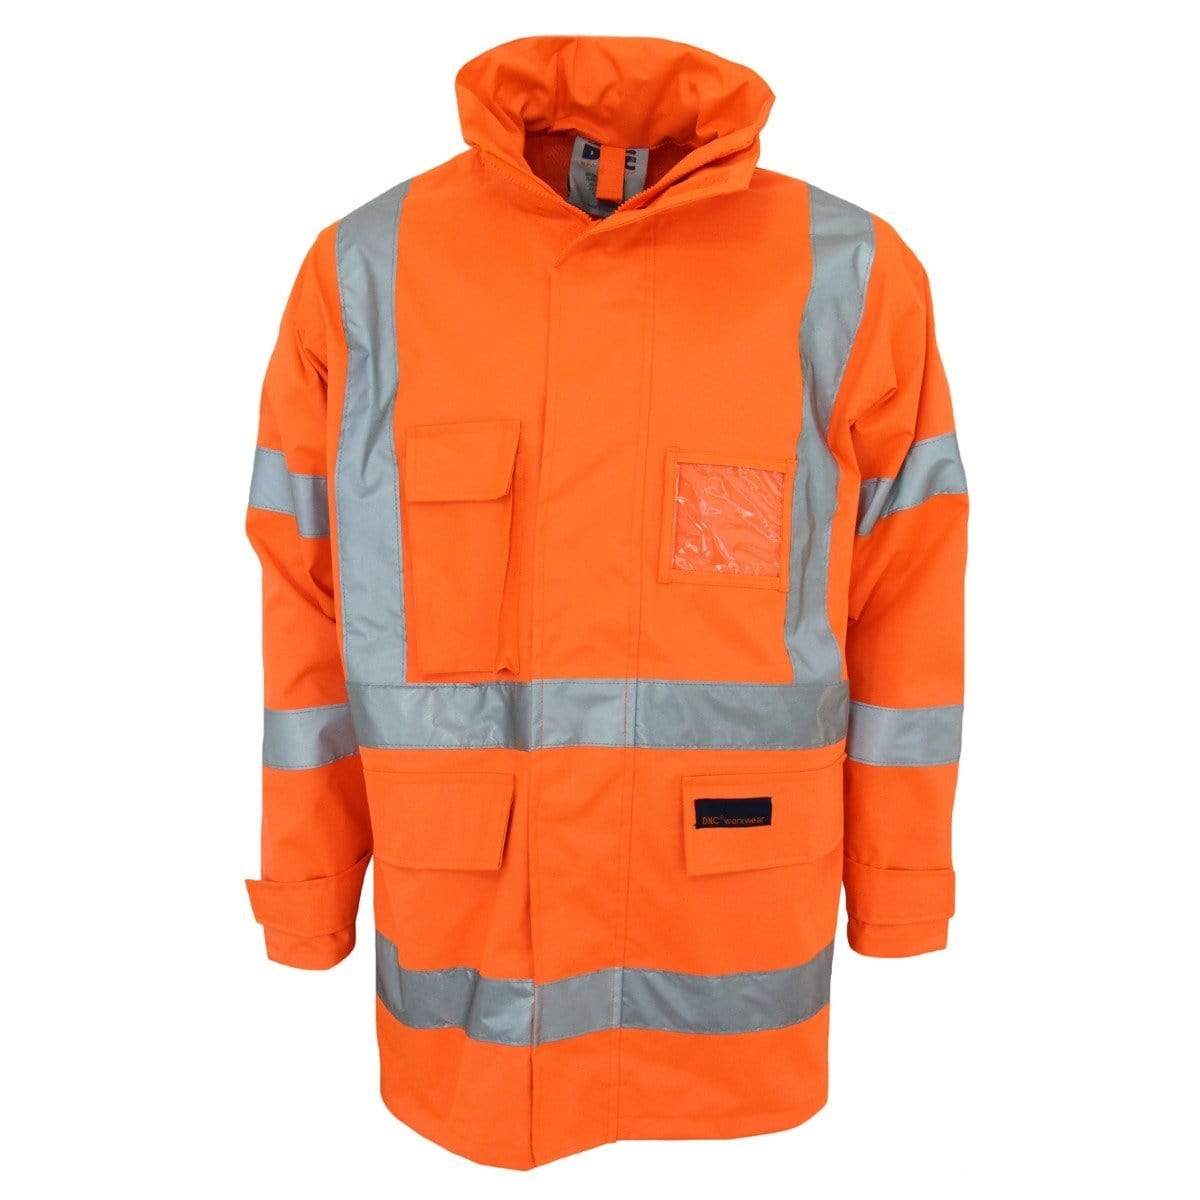 Dnc Workwear Hi-vis "X" Back Rain Jacket Bio-motion Tape - 3996 Work Wear DNC Workwear Orange XS 